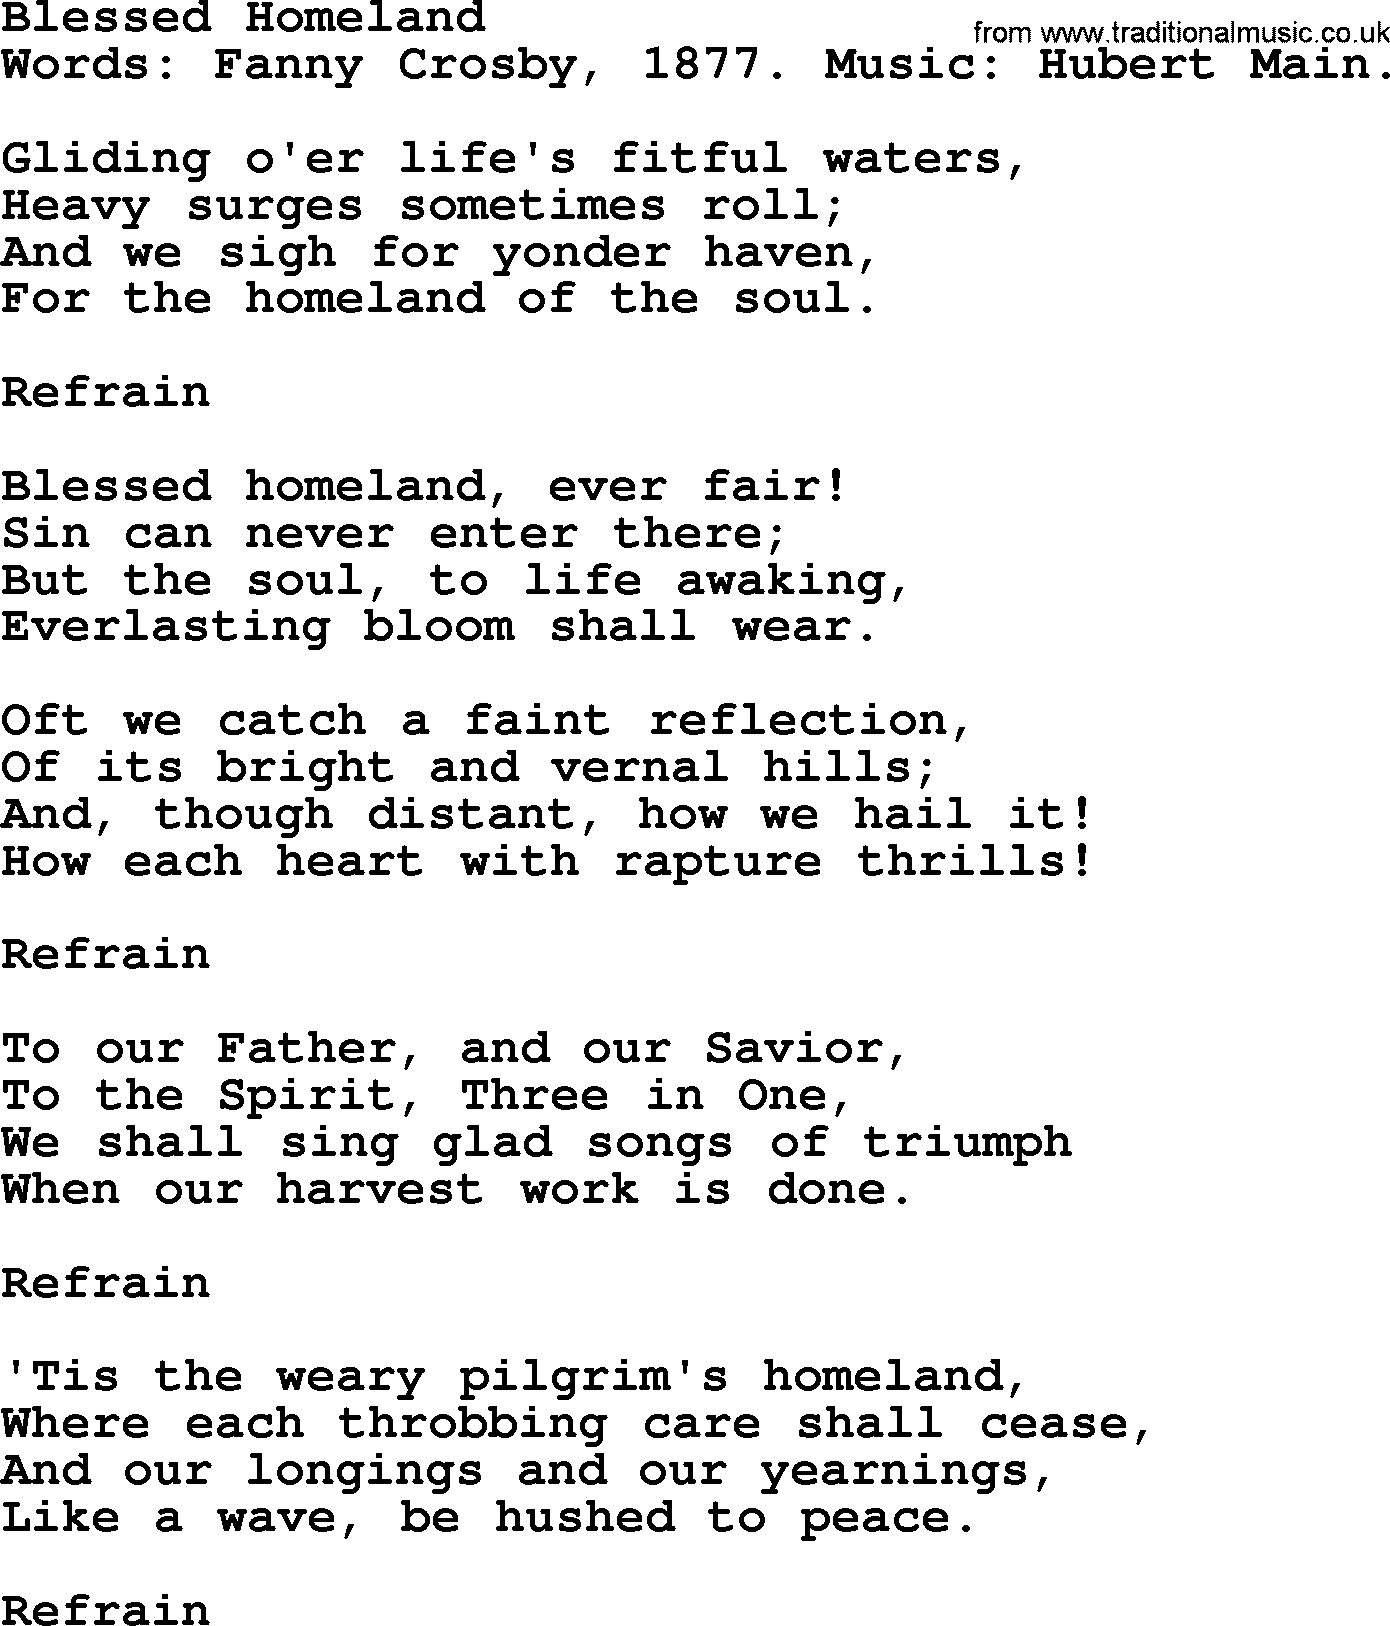 Fanny Crosby song: Blessed Homeland, lyrics